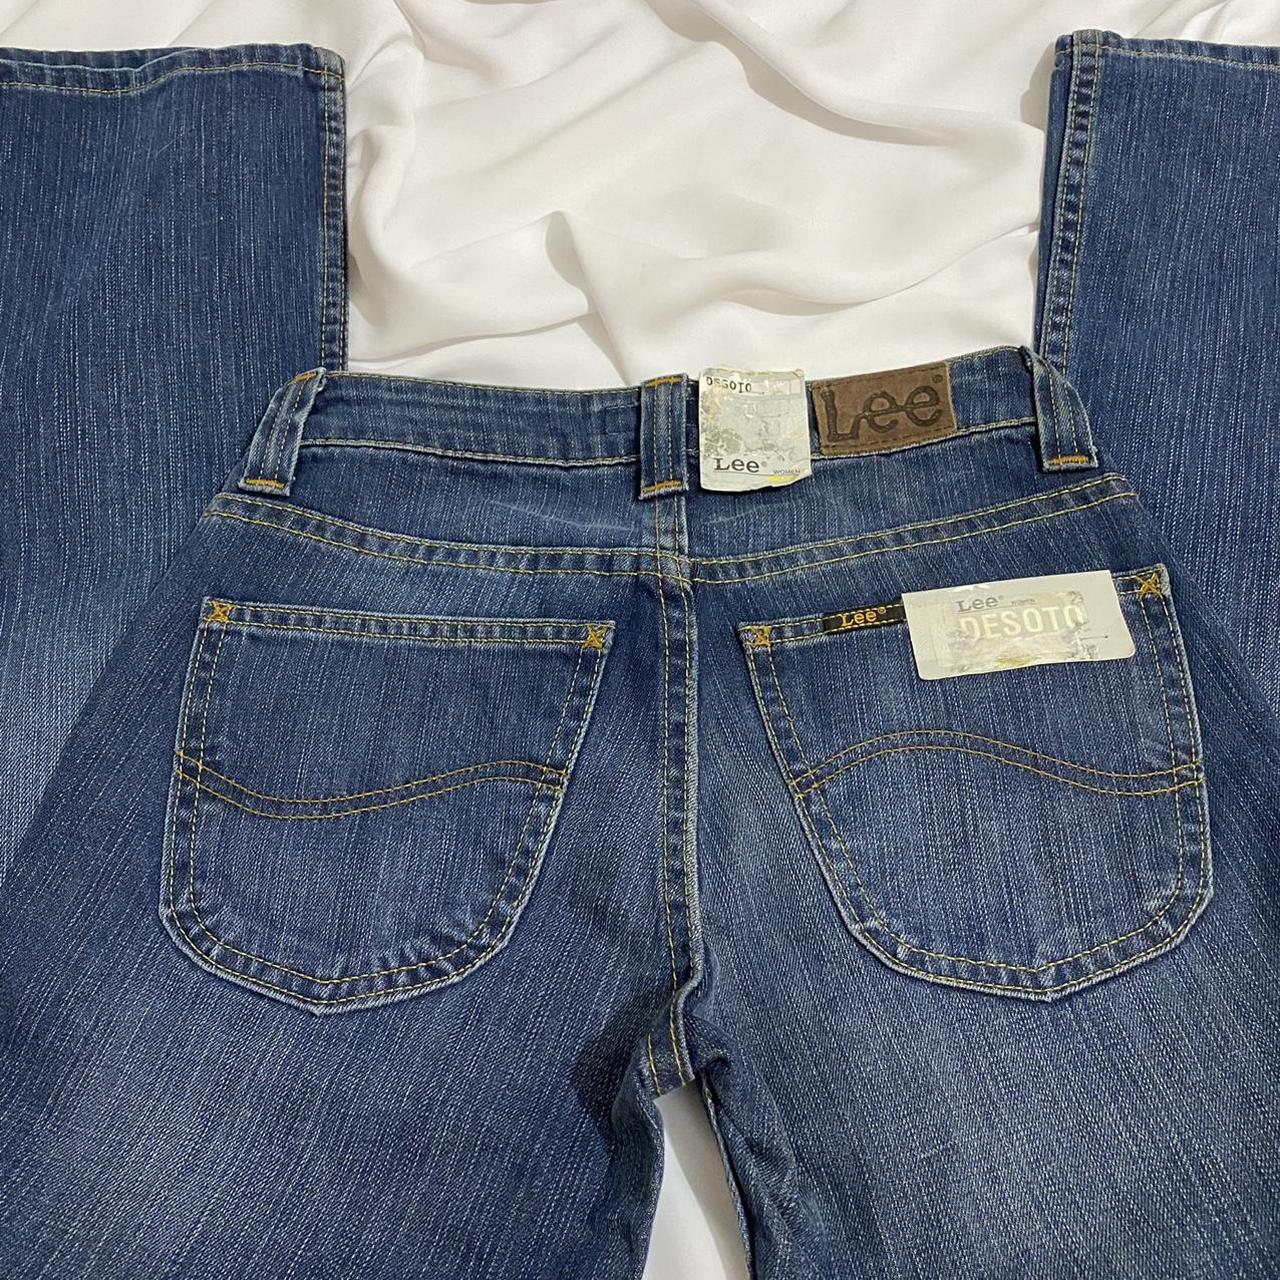 Cute Lee flare jeans denim • Size W26 L 31 ... - Depop